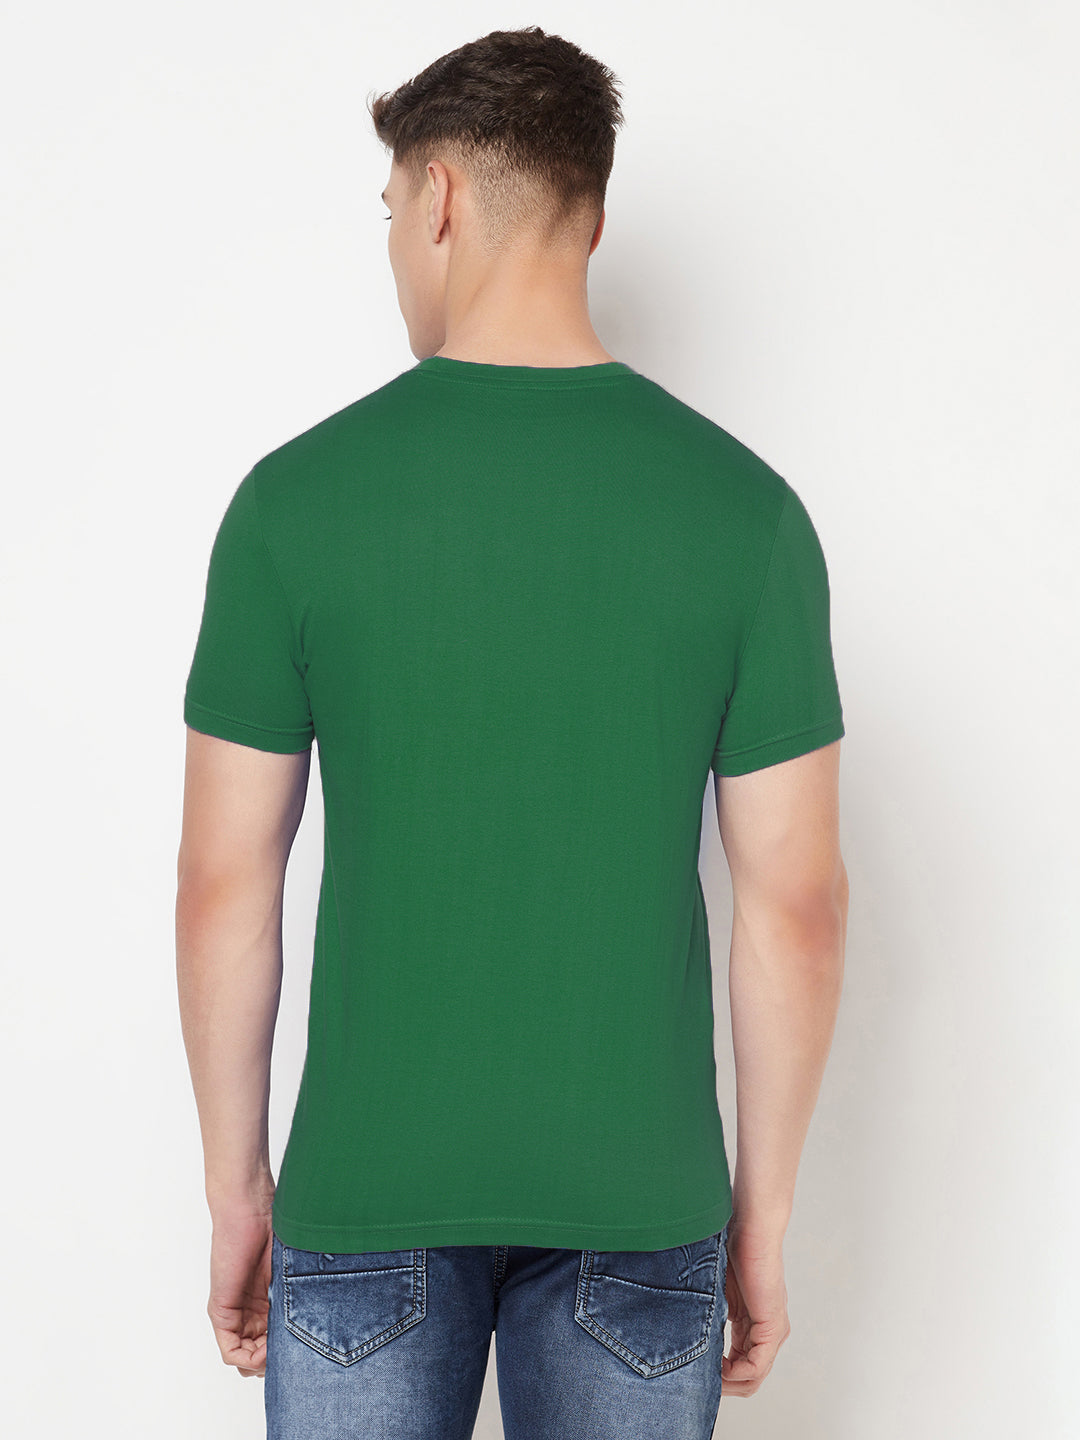 Premium Cotton Tshirts  (Pack of 2- Black,Green)